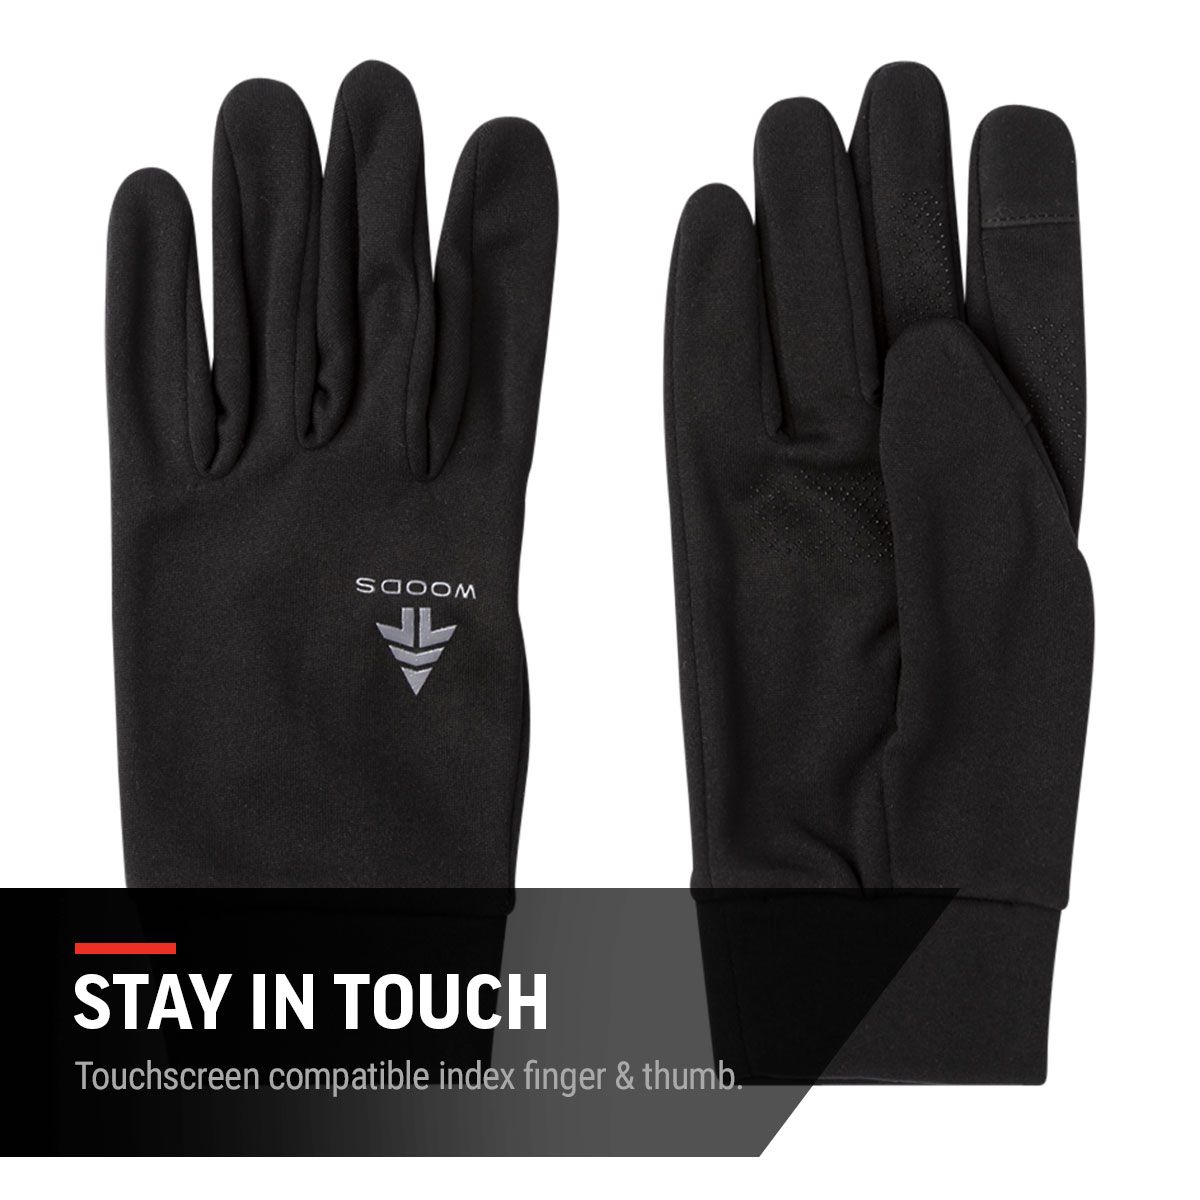 Huk Men's Liner Glove - Black - S